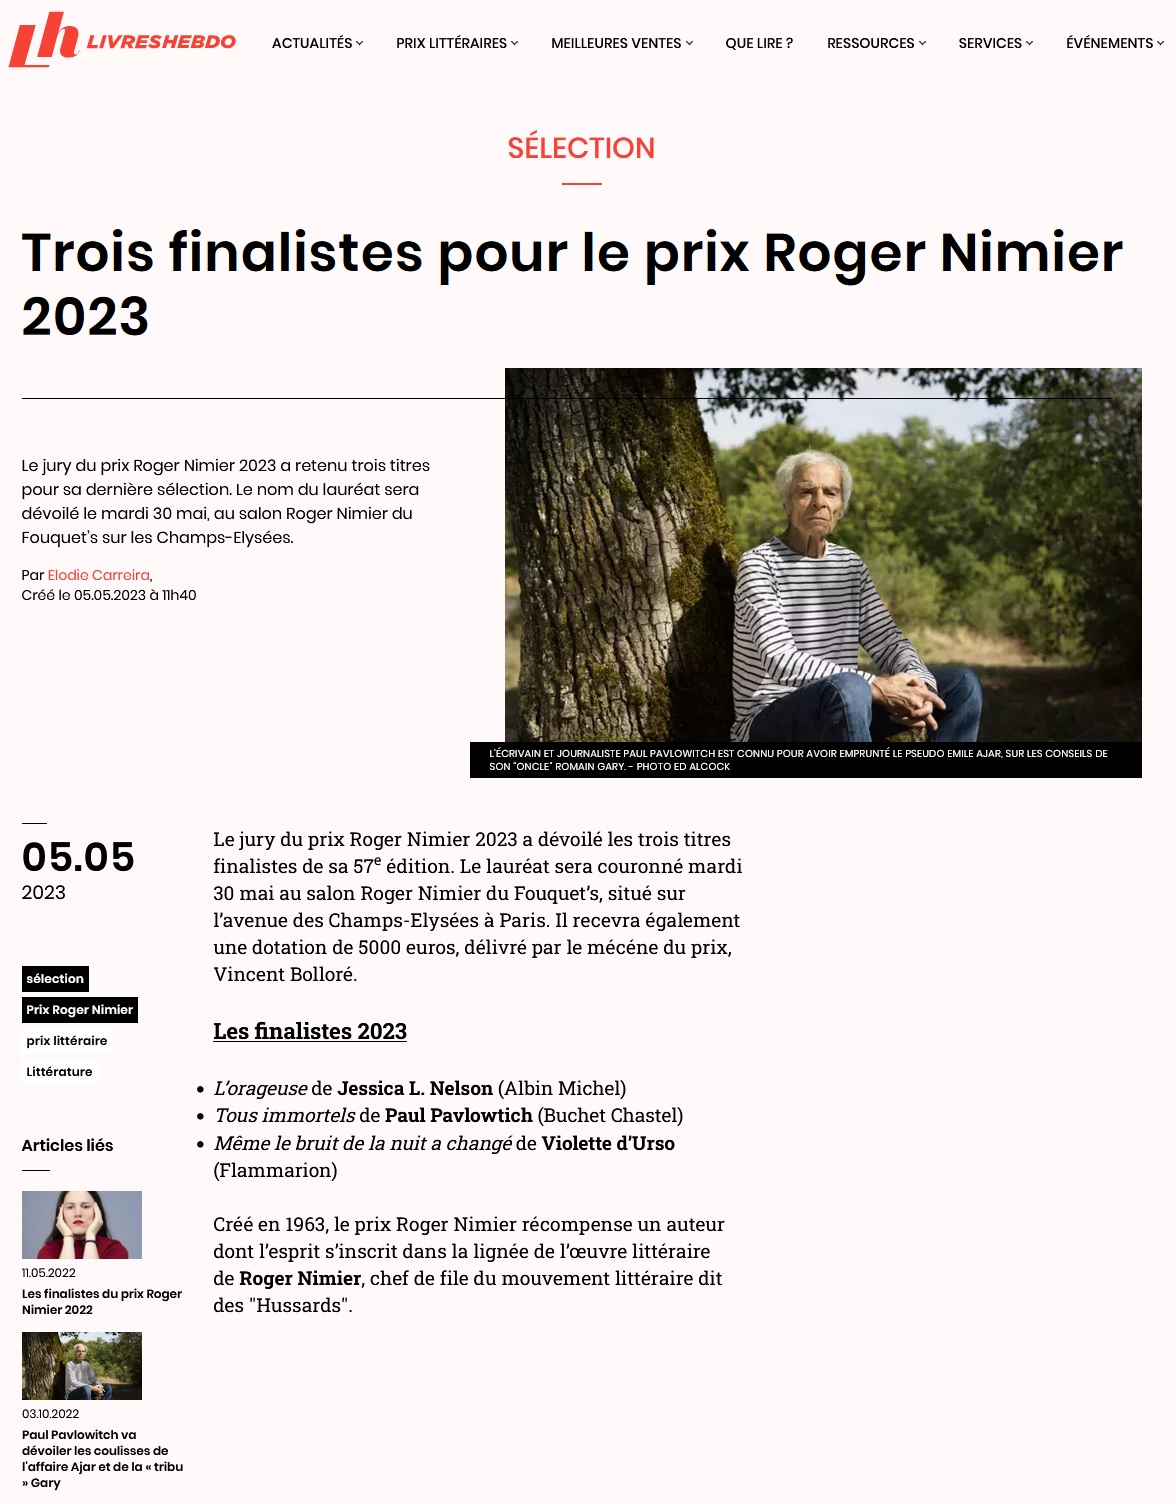 Article Livre Hebdo Prix Roger Nimier 2023